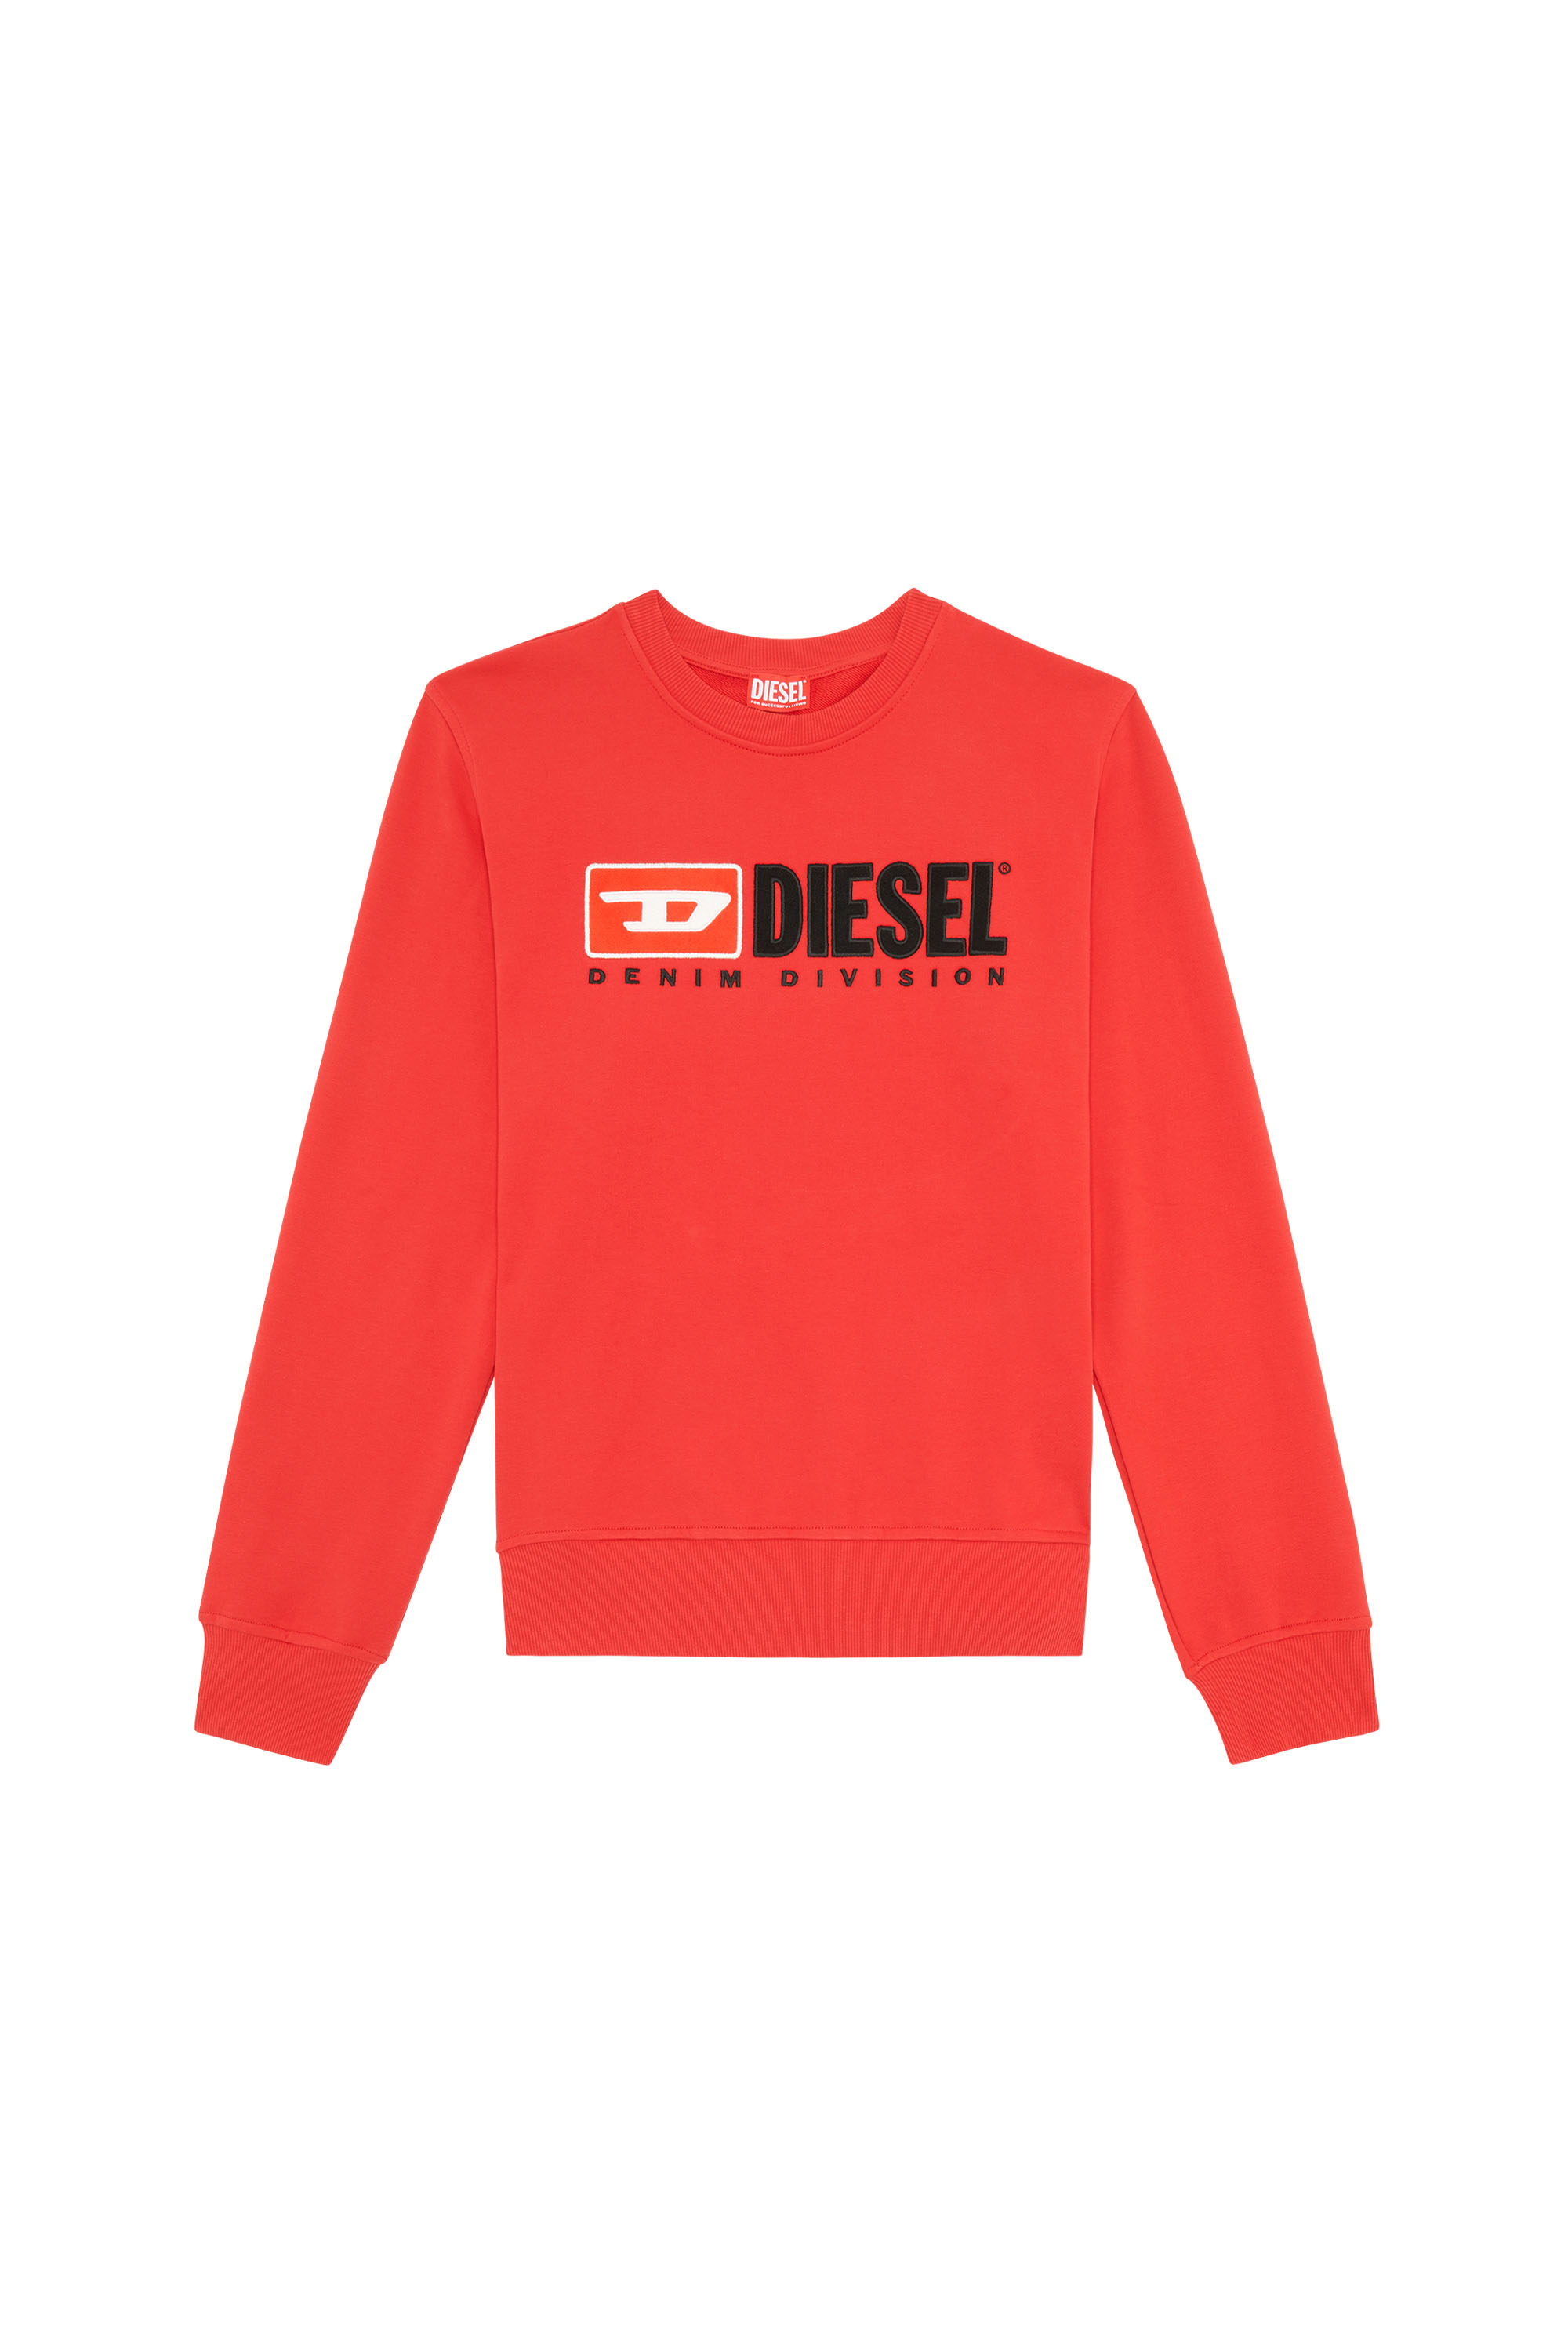 Diesel - S-GINN-DIV, Red - Image 1